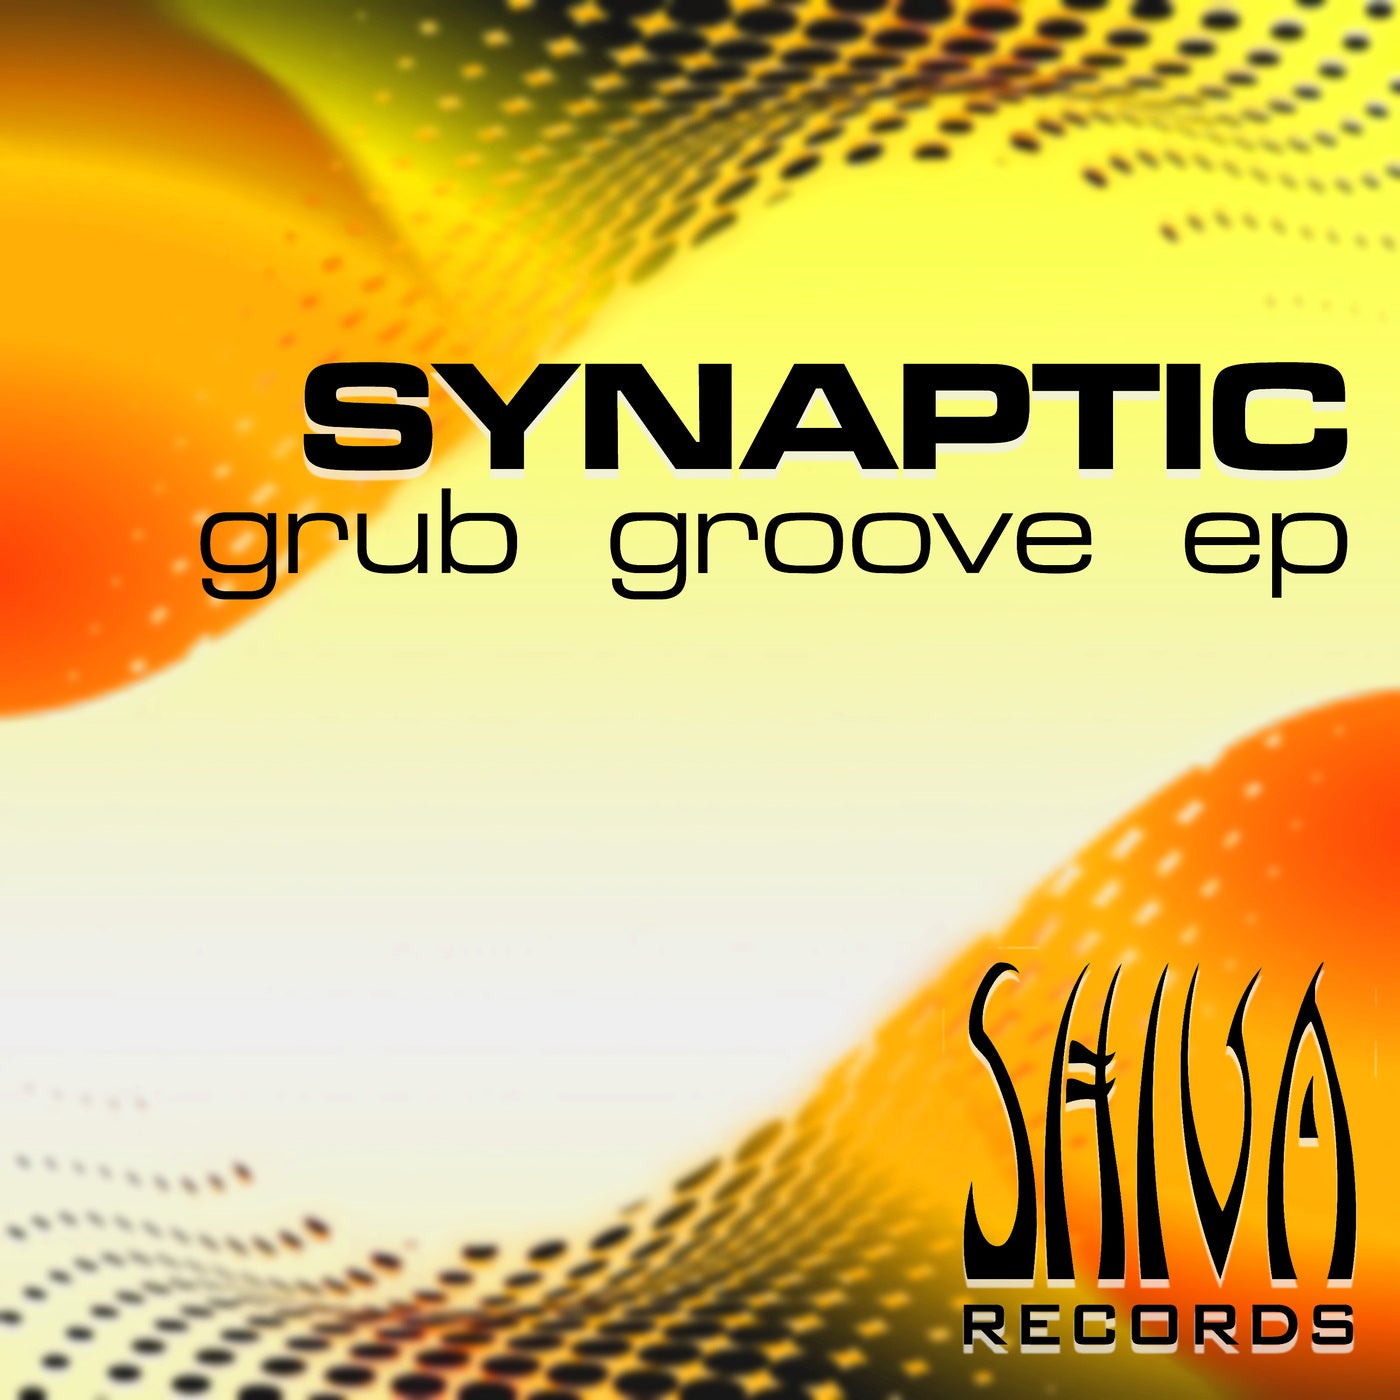 Grub Groove EP